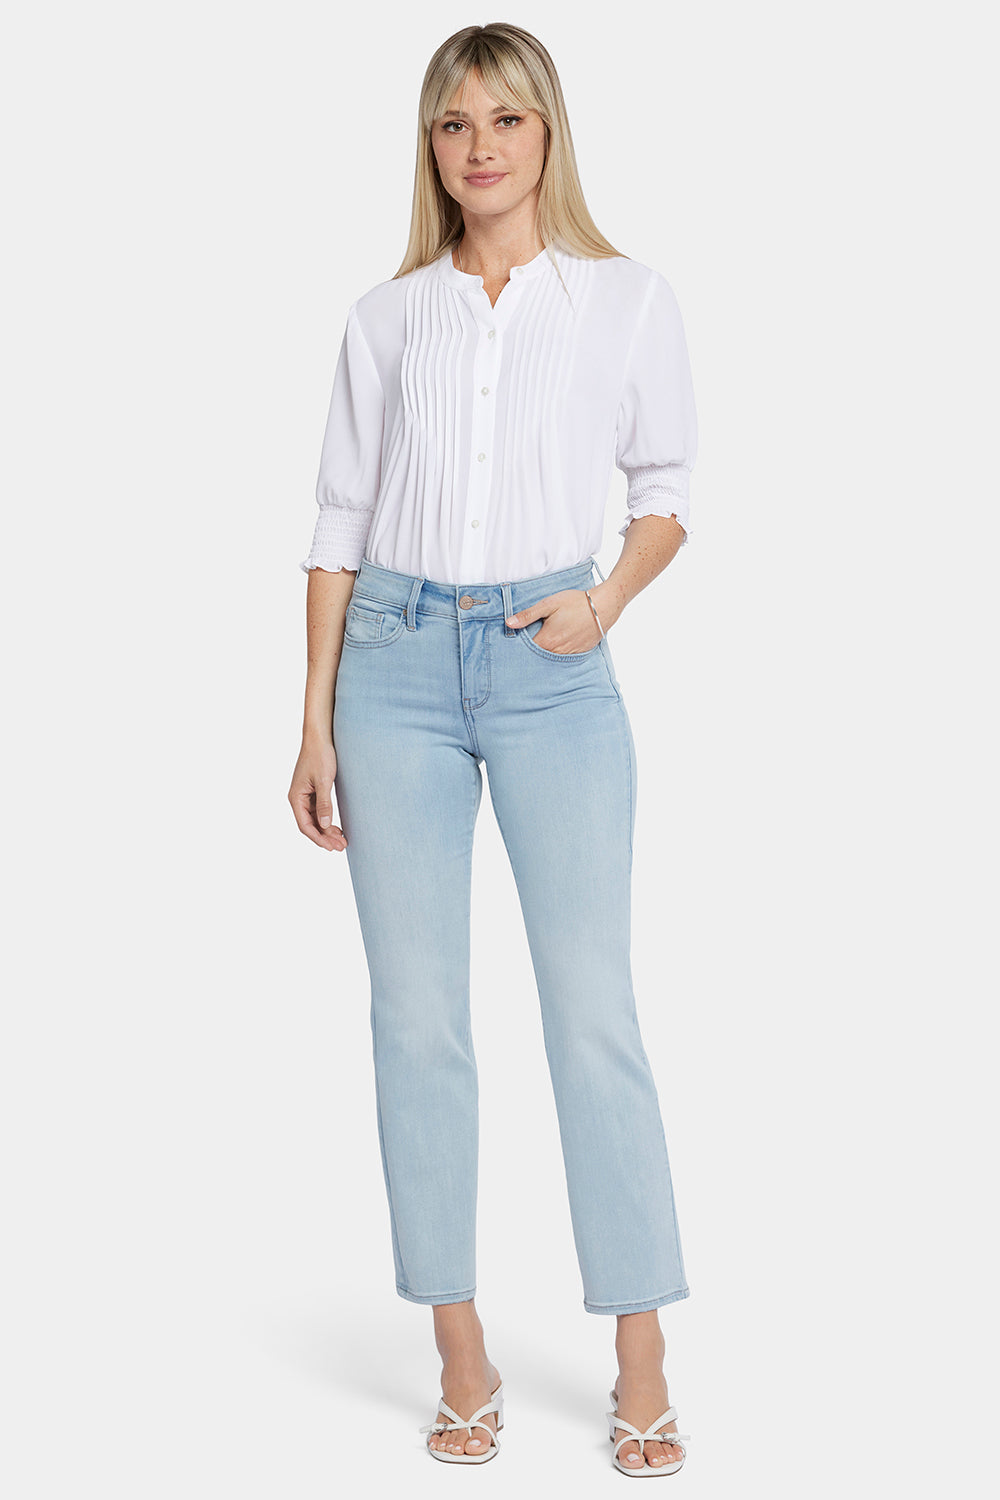 Marilyn Straight Jeans | NYDJ Apparel